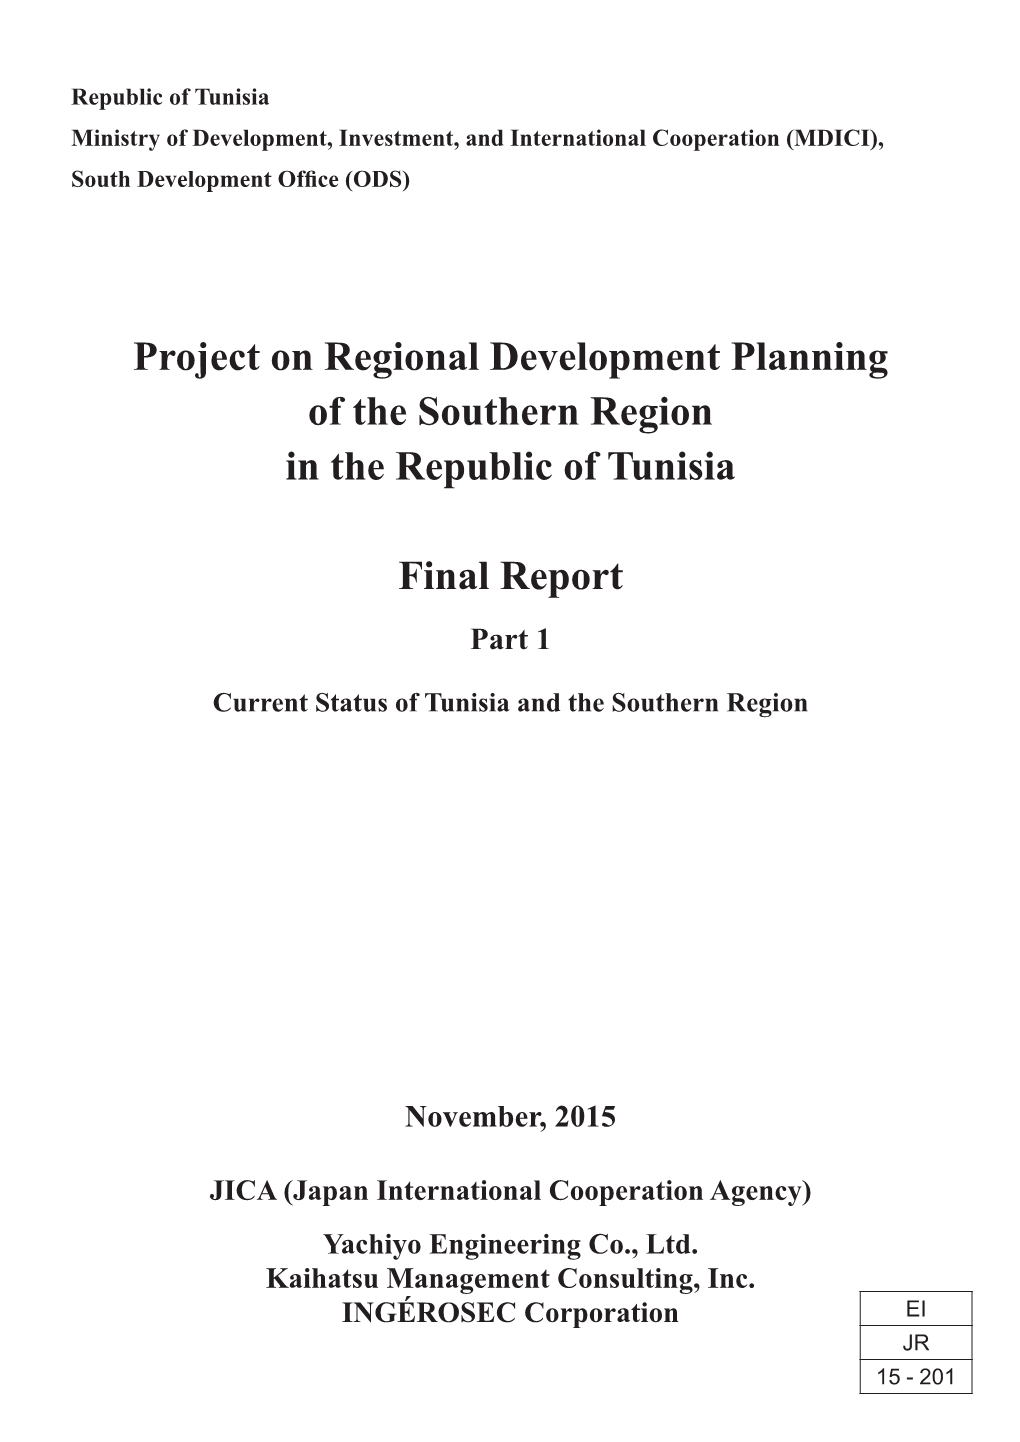 Project on Regional Development Planning of the Southern Region In